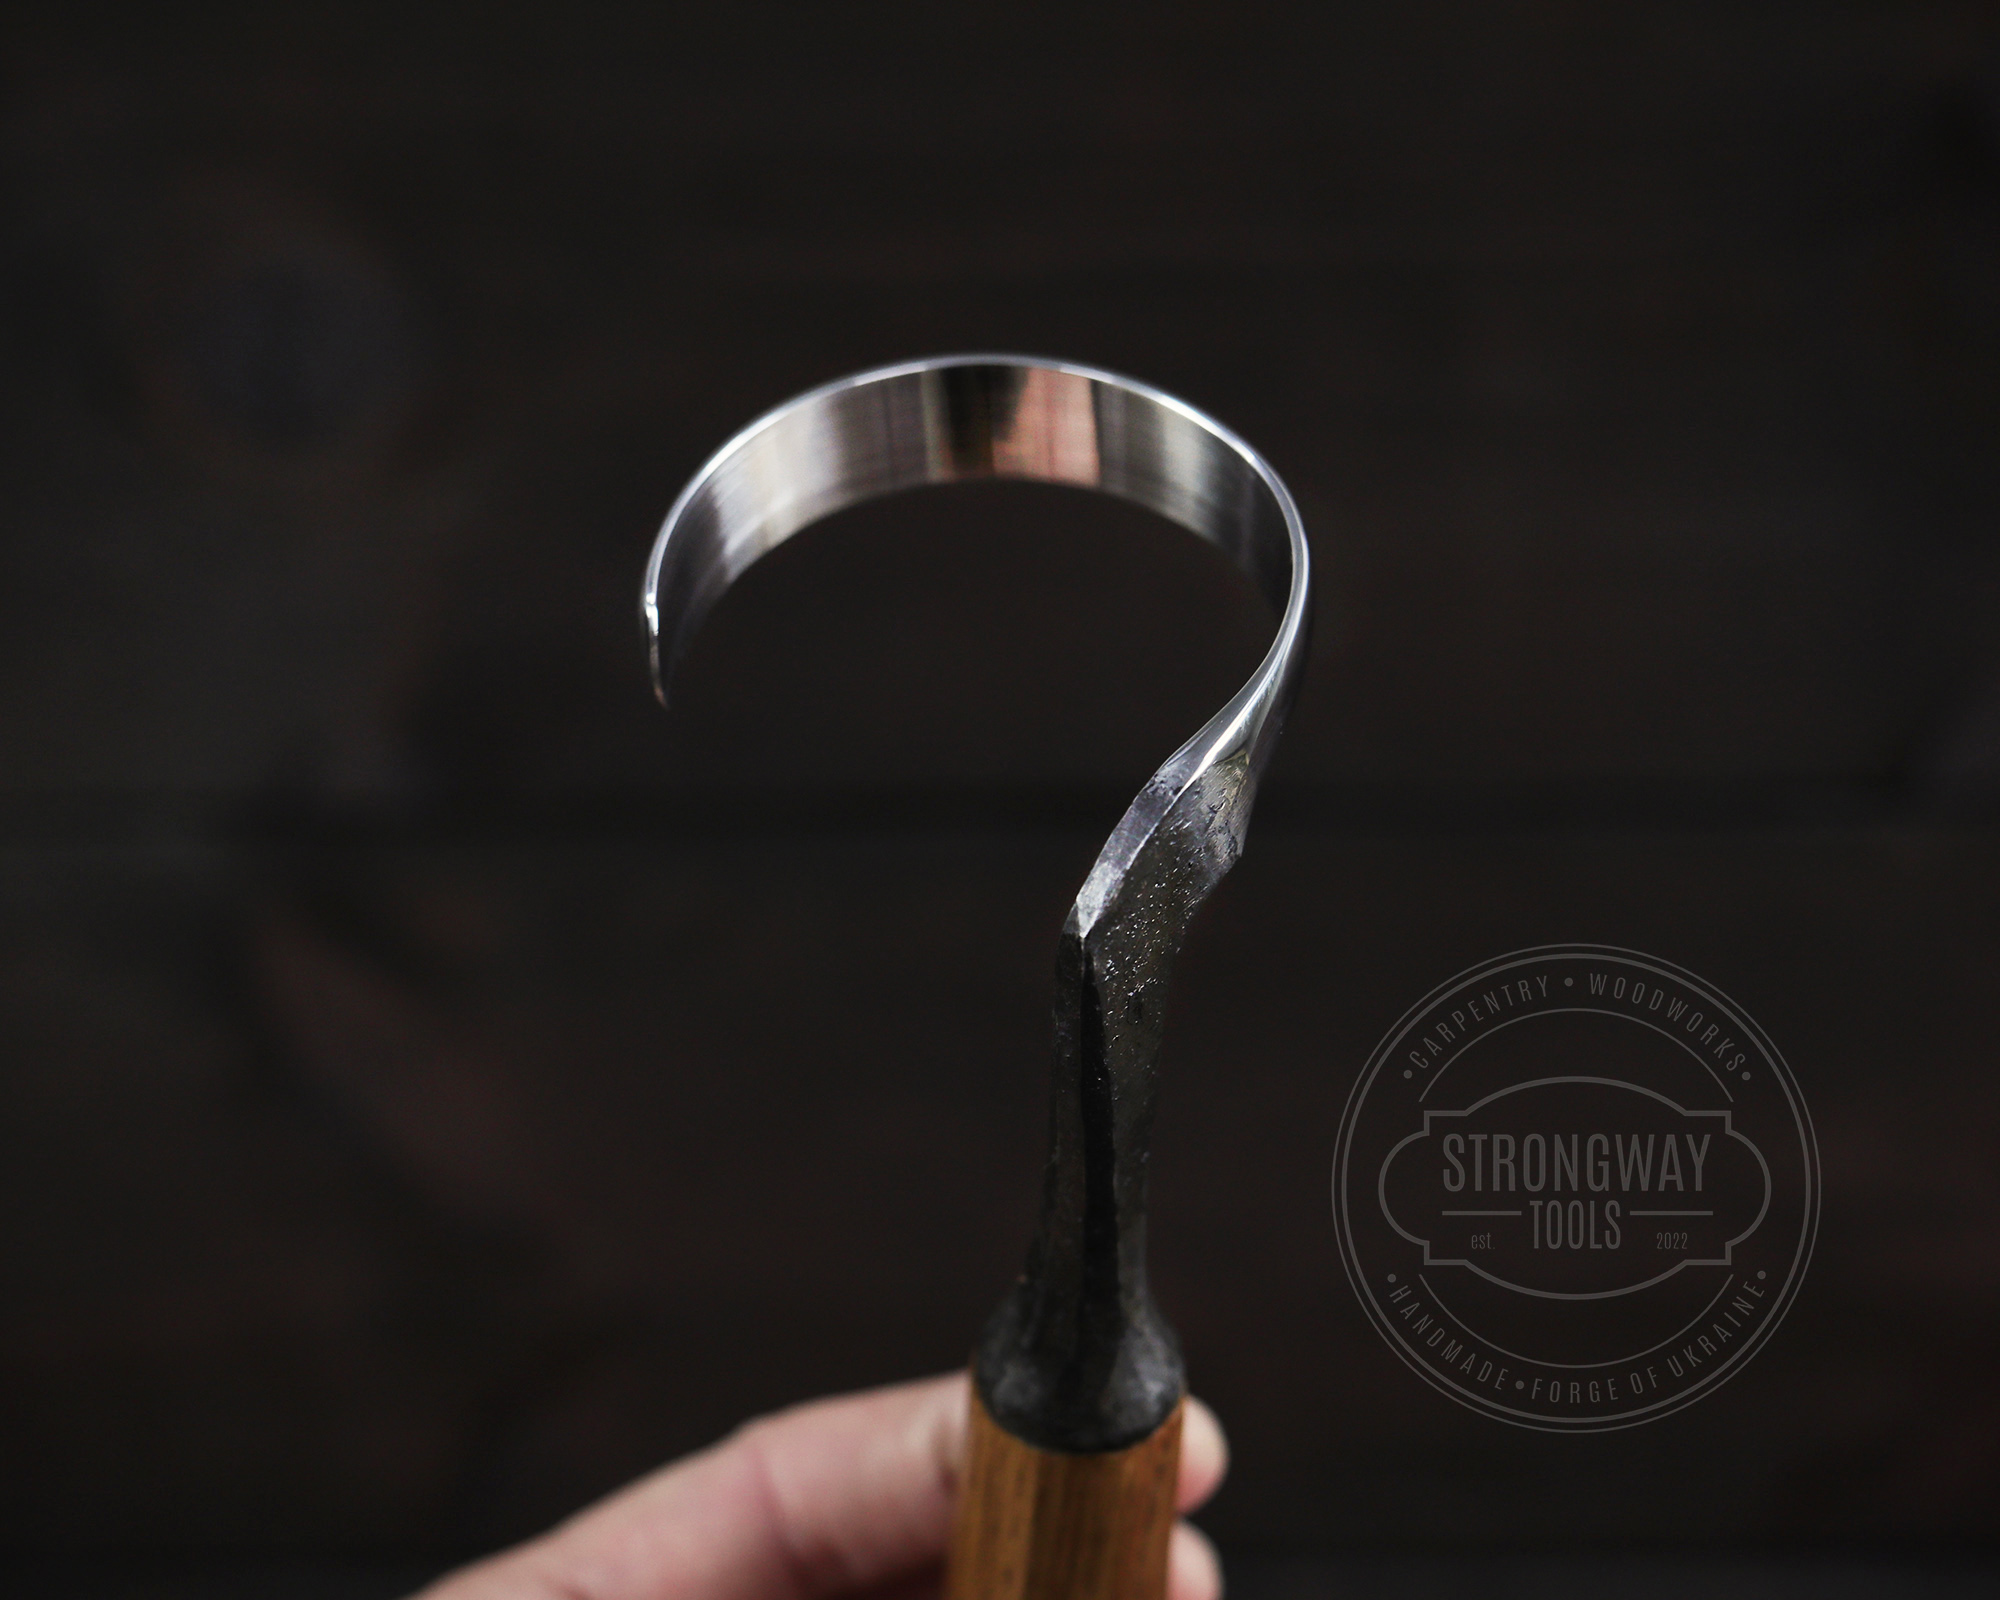 Pelican Wood Knife - FC003 - The Spoon Crank